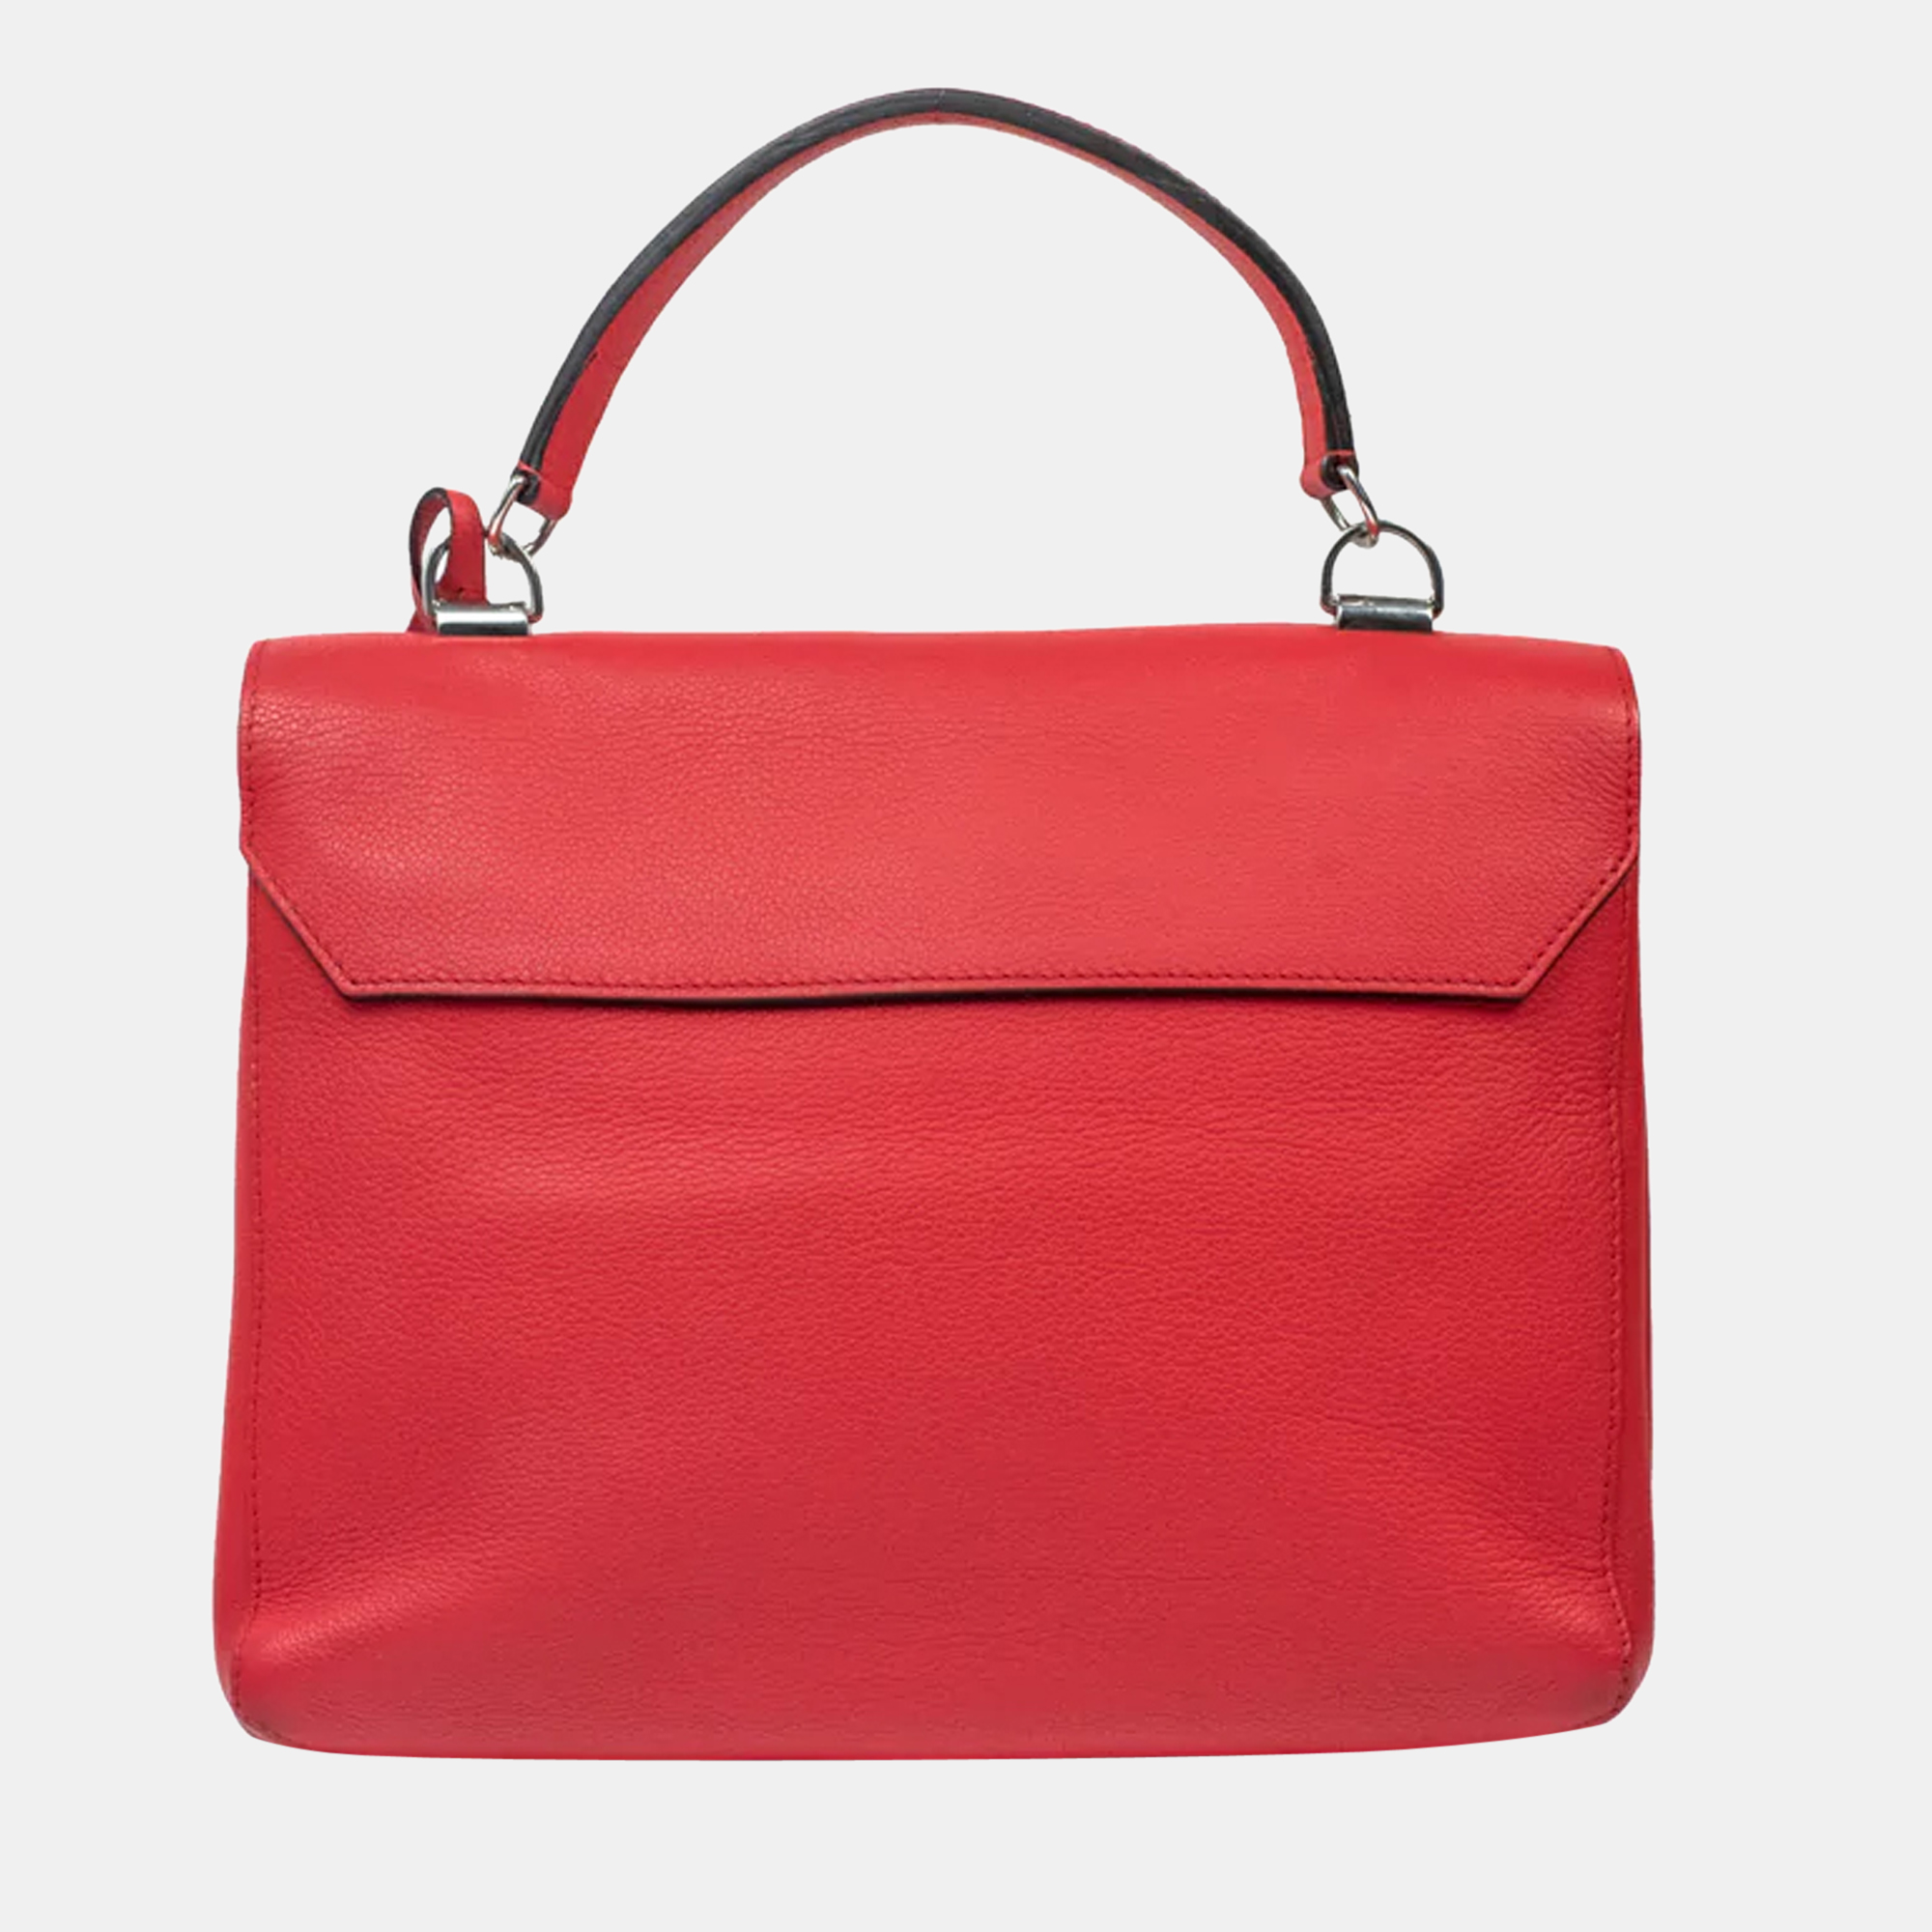 Louis Vuitton Lockme Handbag In Red Leather